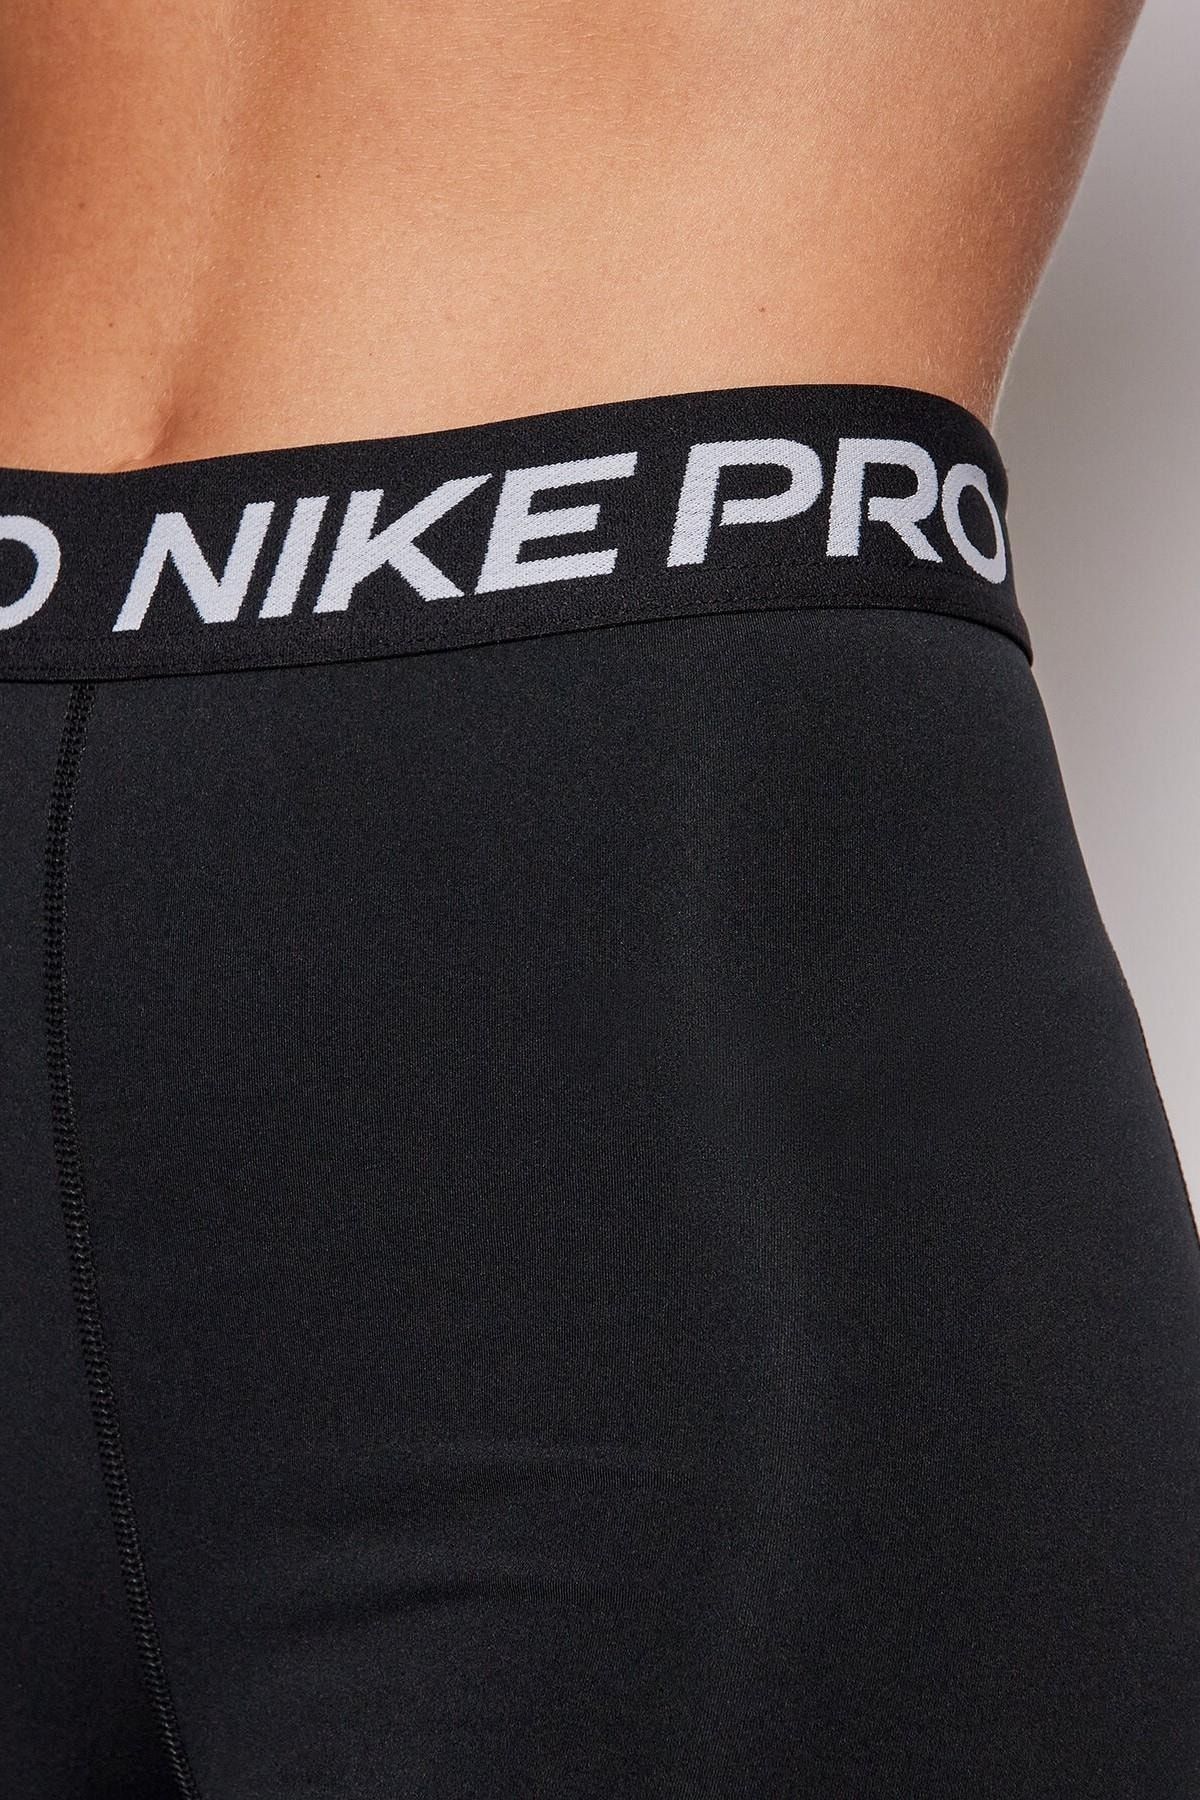 Nike Pro Tigh Fit Full Length Toparlayıcı Uzun Siyah Tayt Fiyatı, Yorumları  - Trendyol